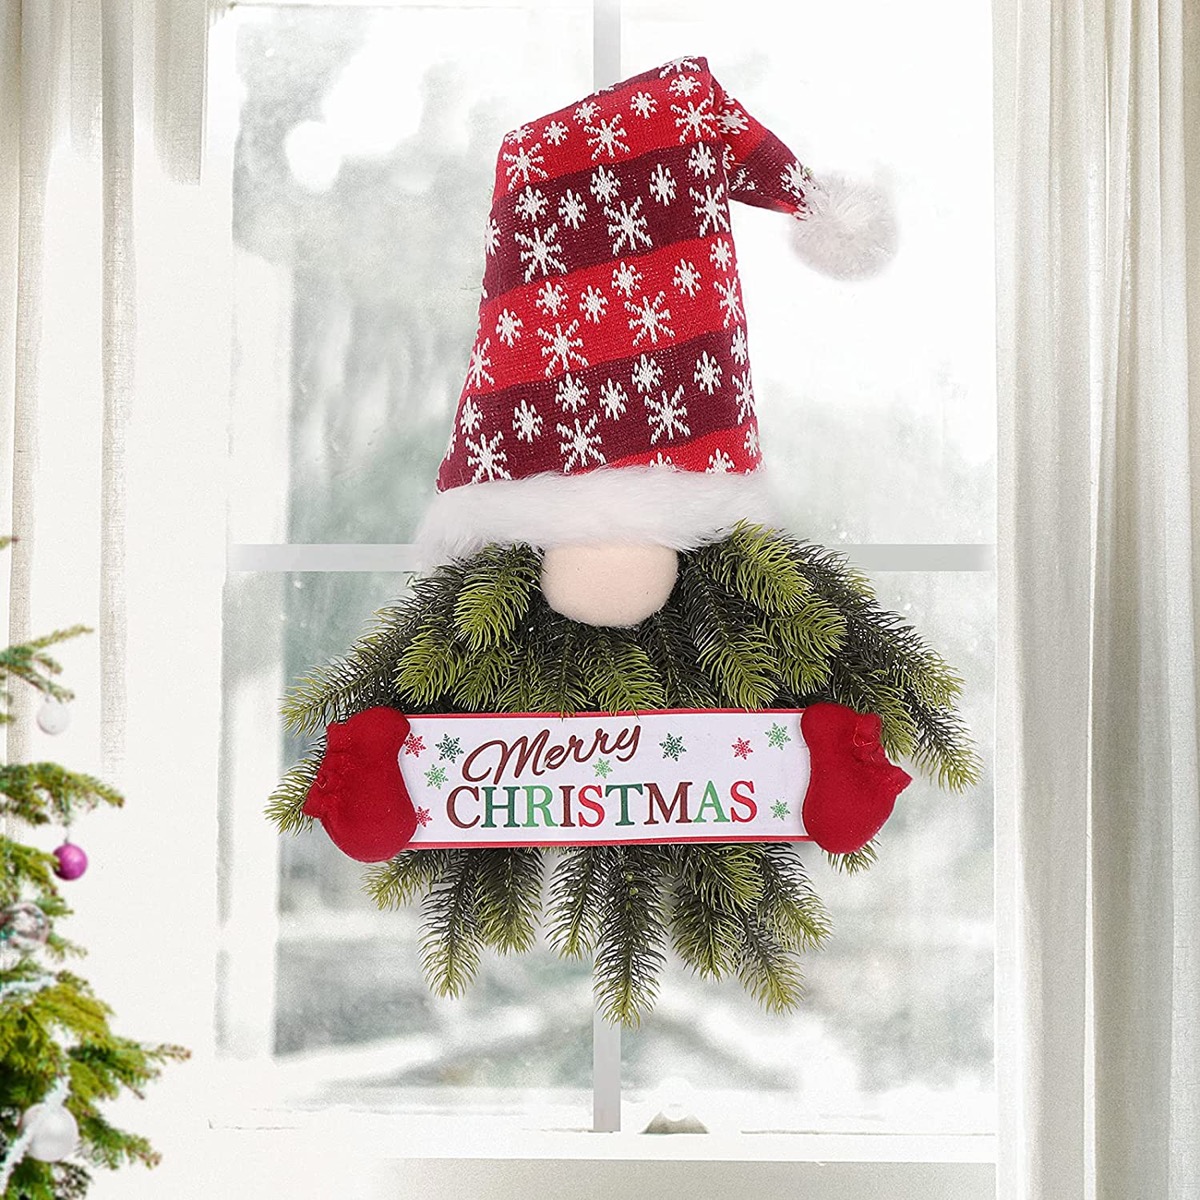 51 Christmas Door Decor Ideas to Spread Cheer This Holiday Season